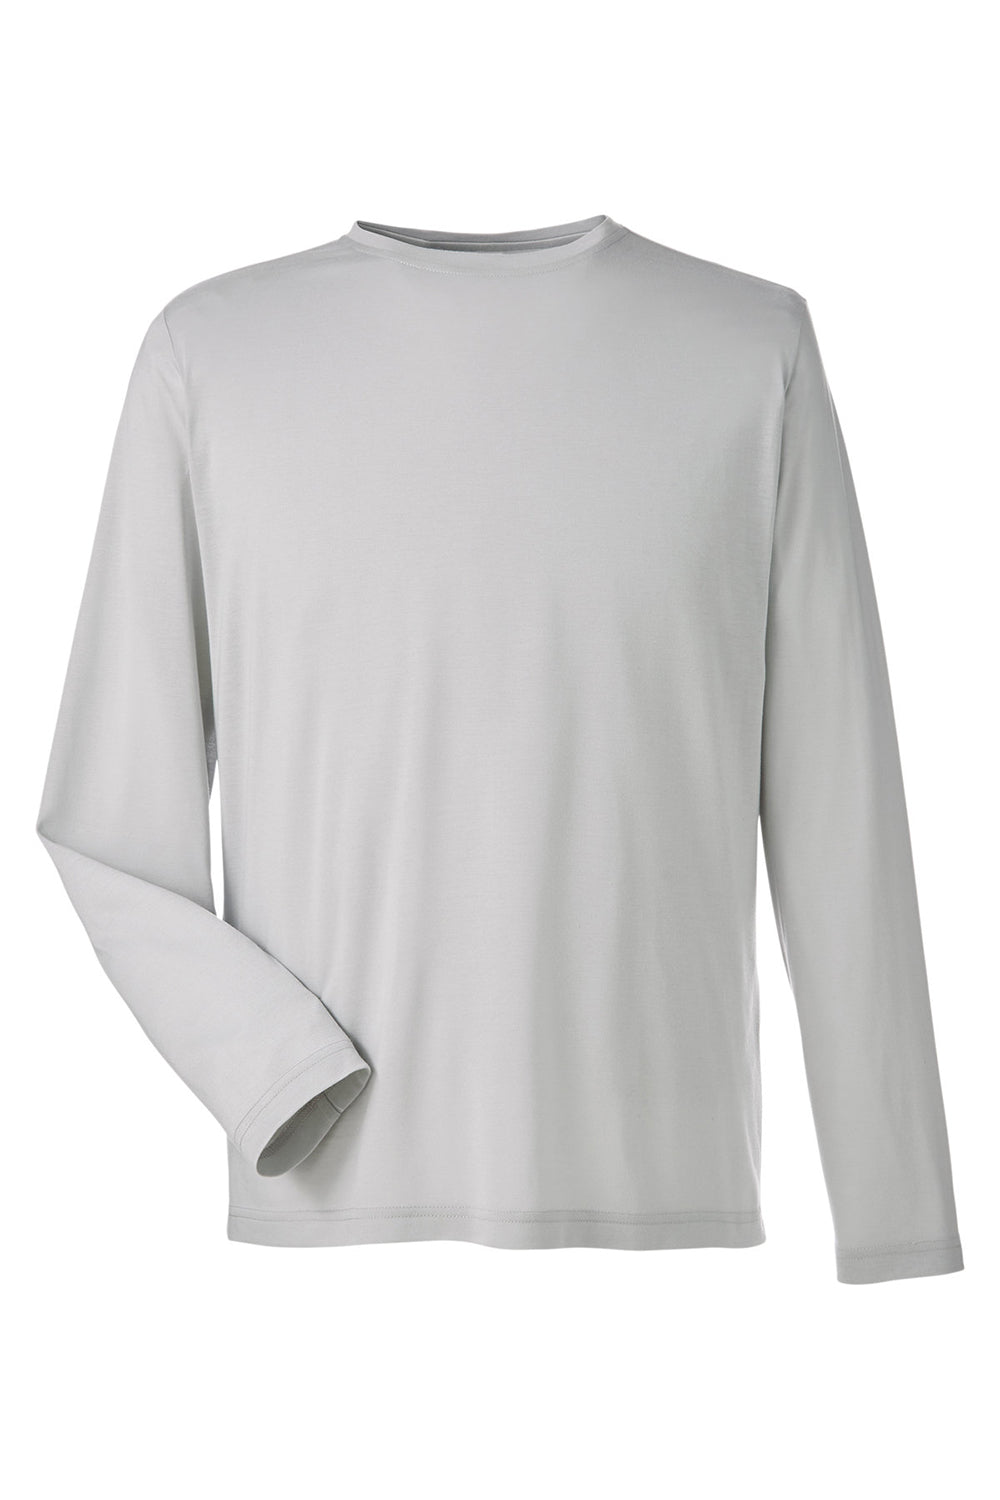 Core 365 CE111L Mens Fusion ChromaSoft Performance Moisture Wicking Long Sleeve Crewneck T-Shirt Platinum Grey Flat Front